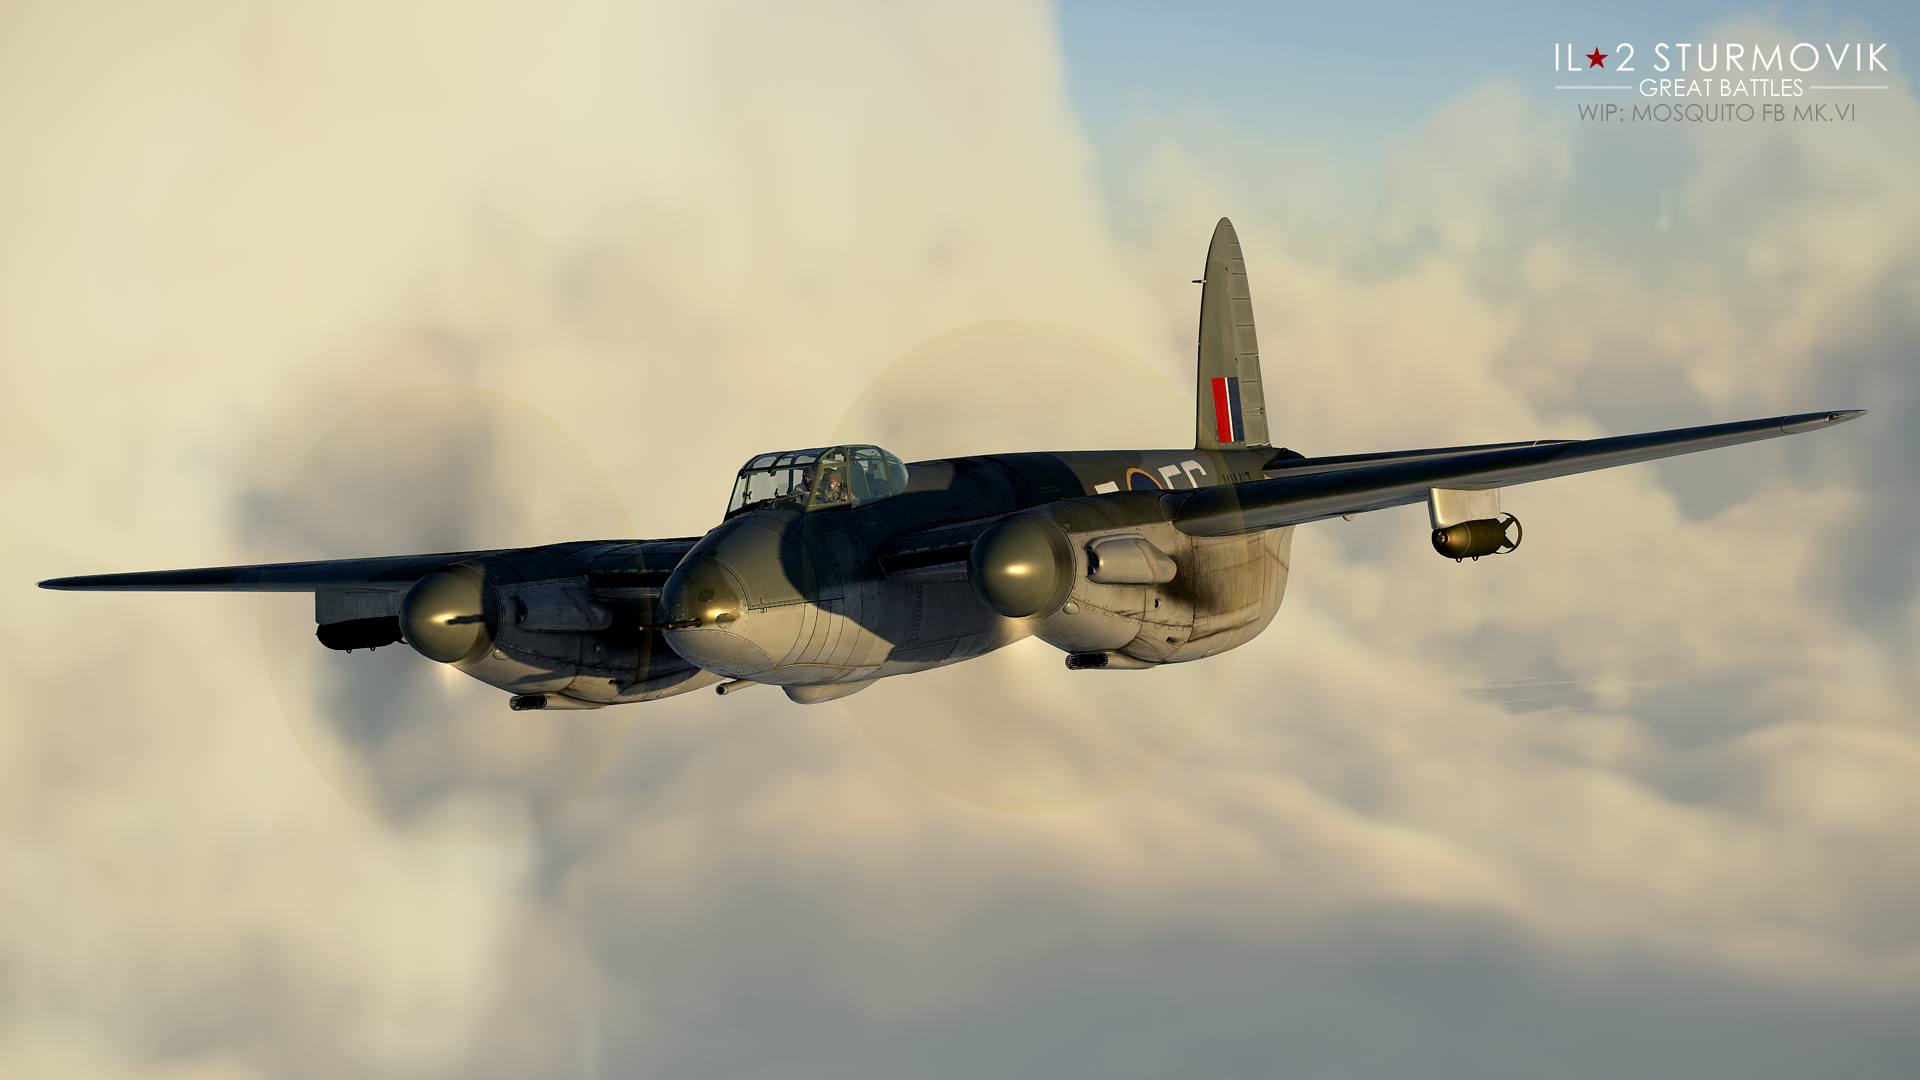 General 1920x1080 aircraft airplane De Havilland Mosquito video games World War II IL-2 Sturmovik (video game) screen shot flight simulator British aircraft